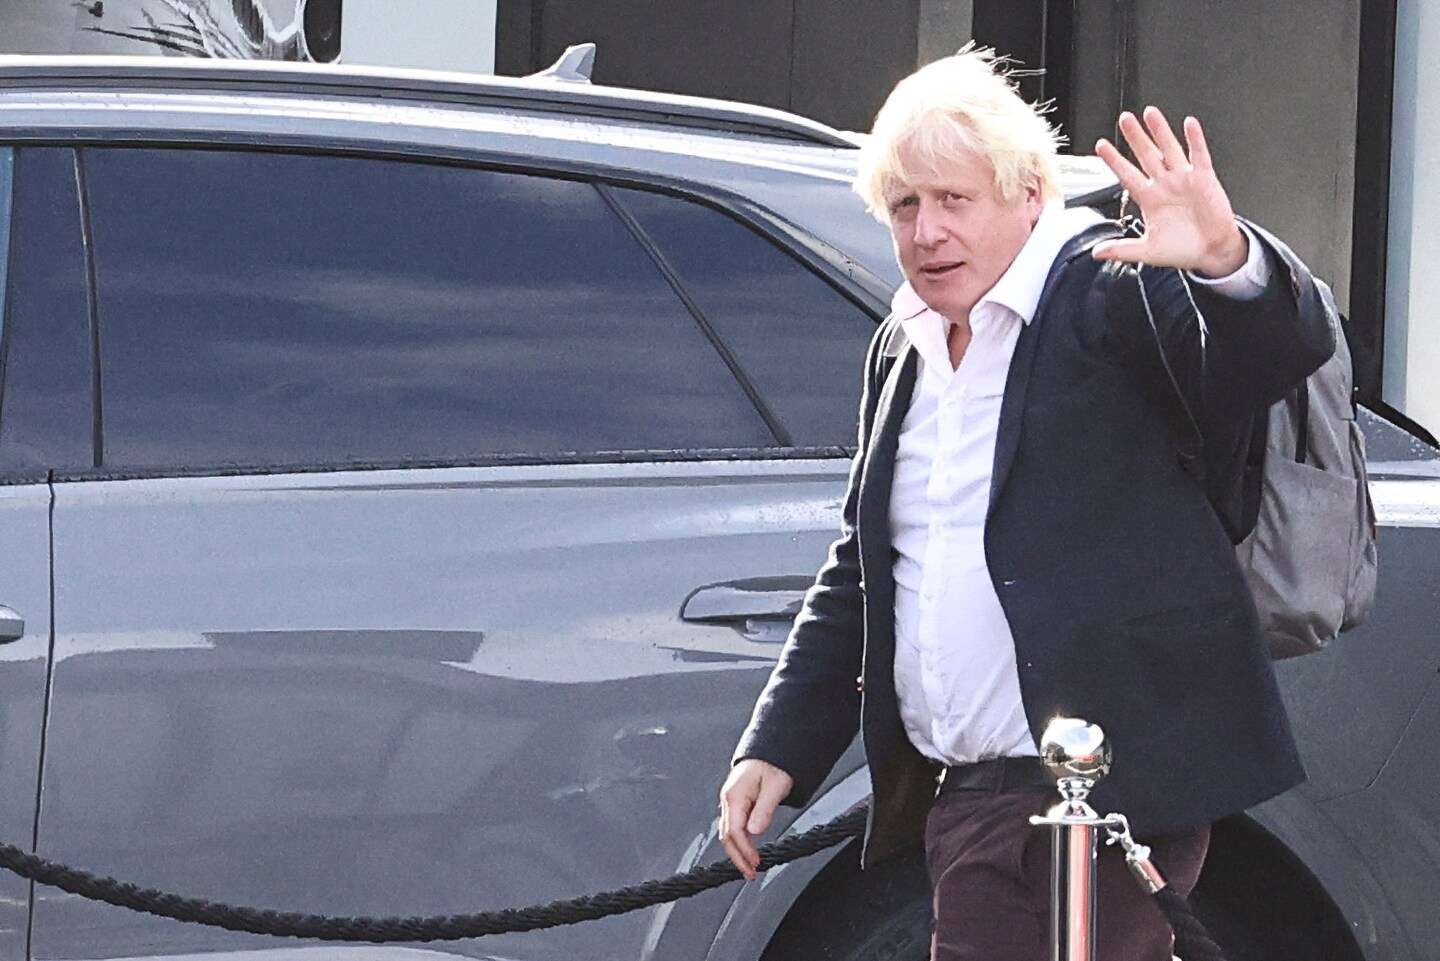 Boris Johnson drops bid to return to power in U.K., reports say